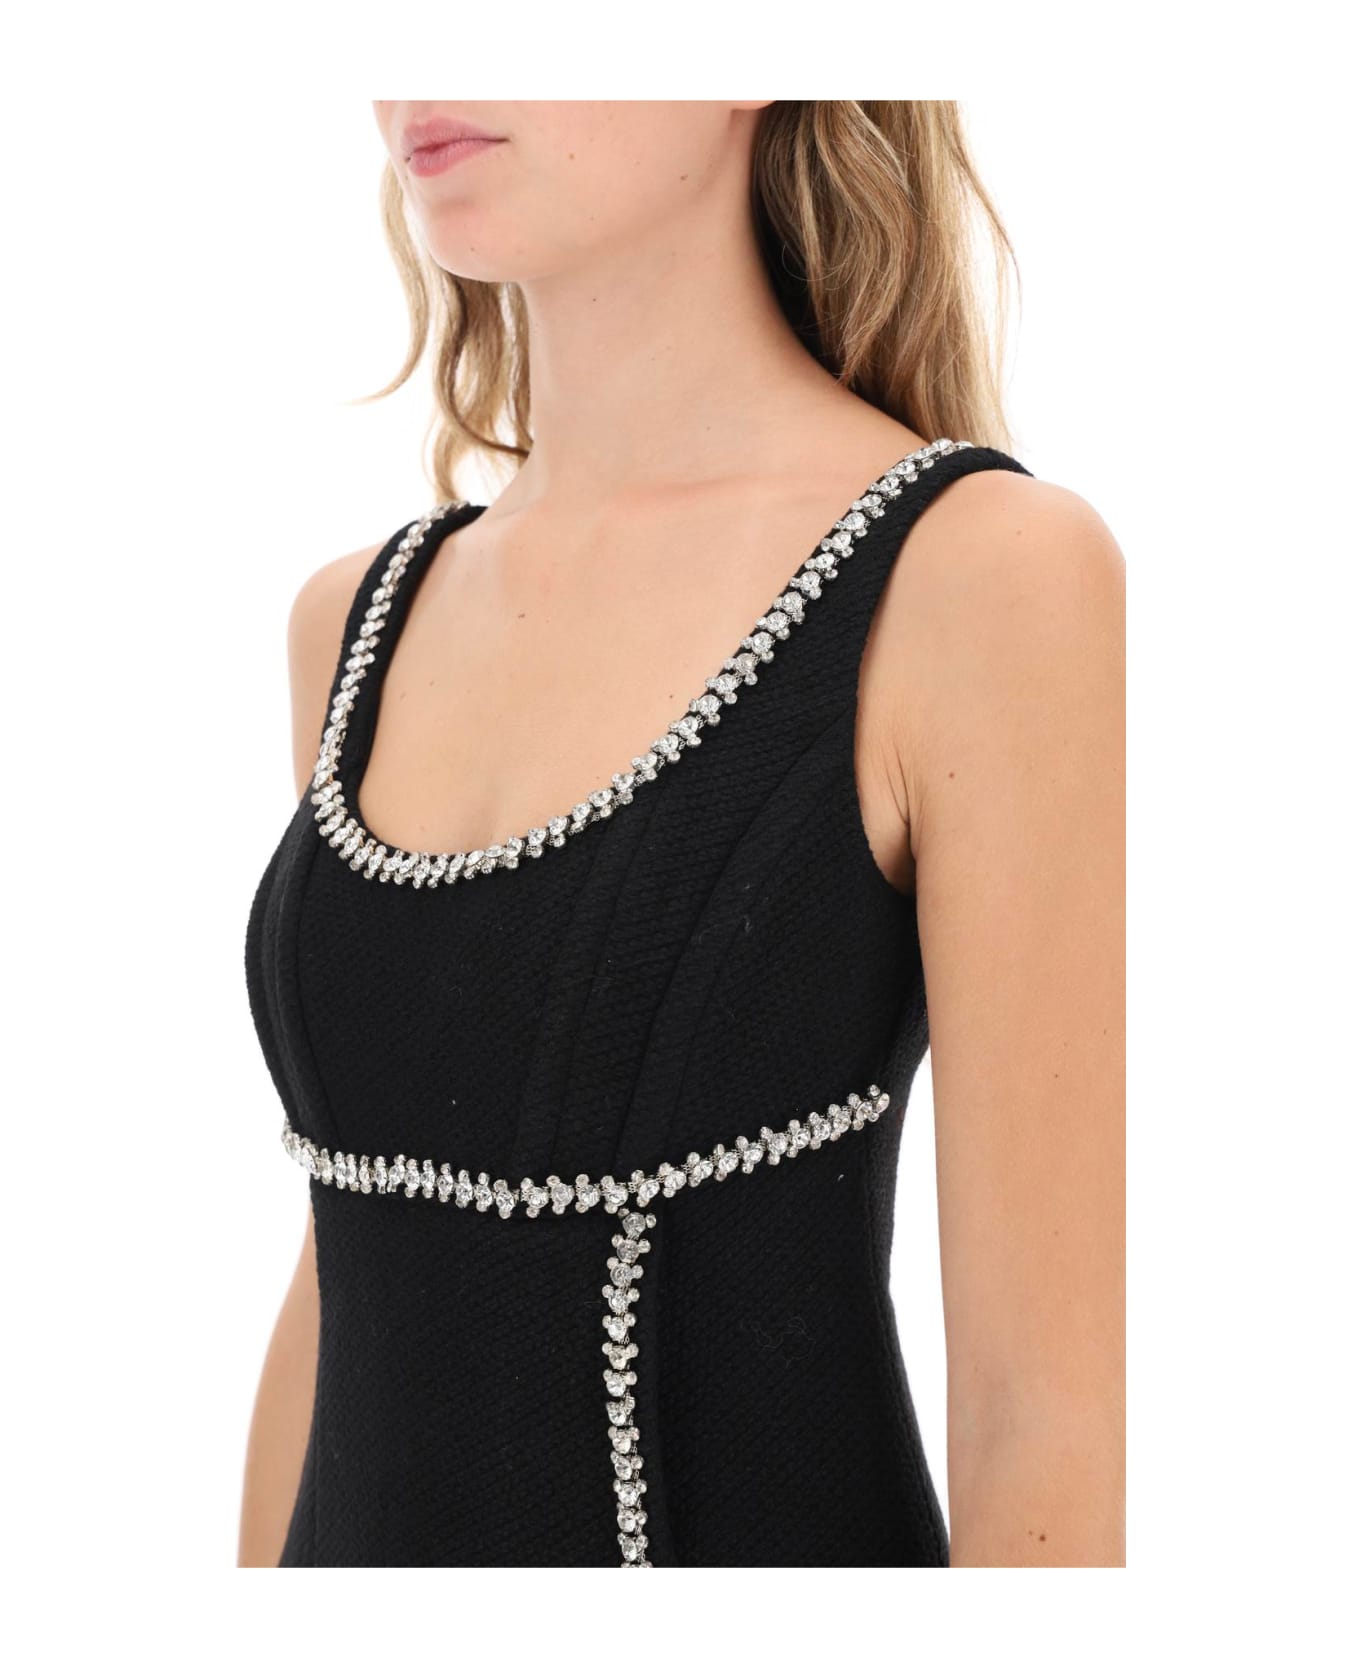 self-portrait Texturized-wool Mini Dress With Crystals - BLACK (Black)